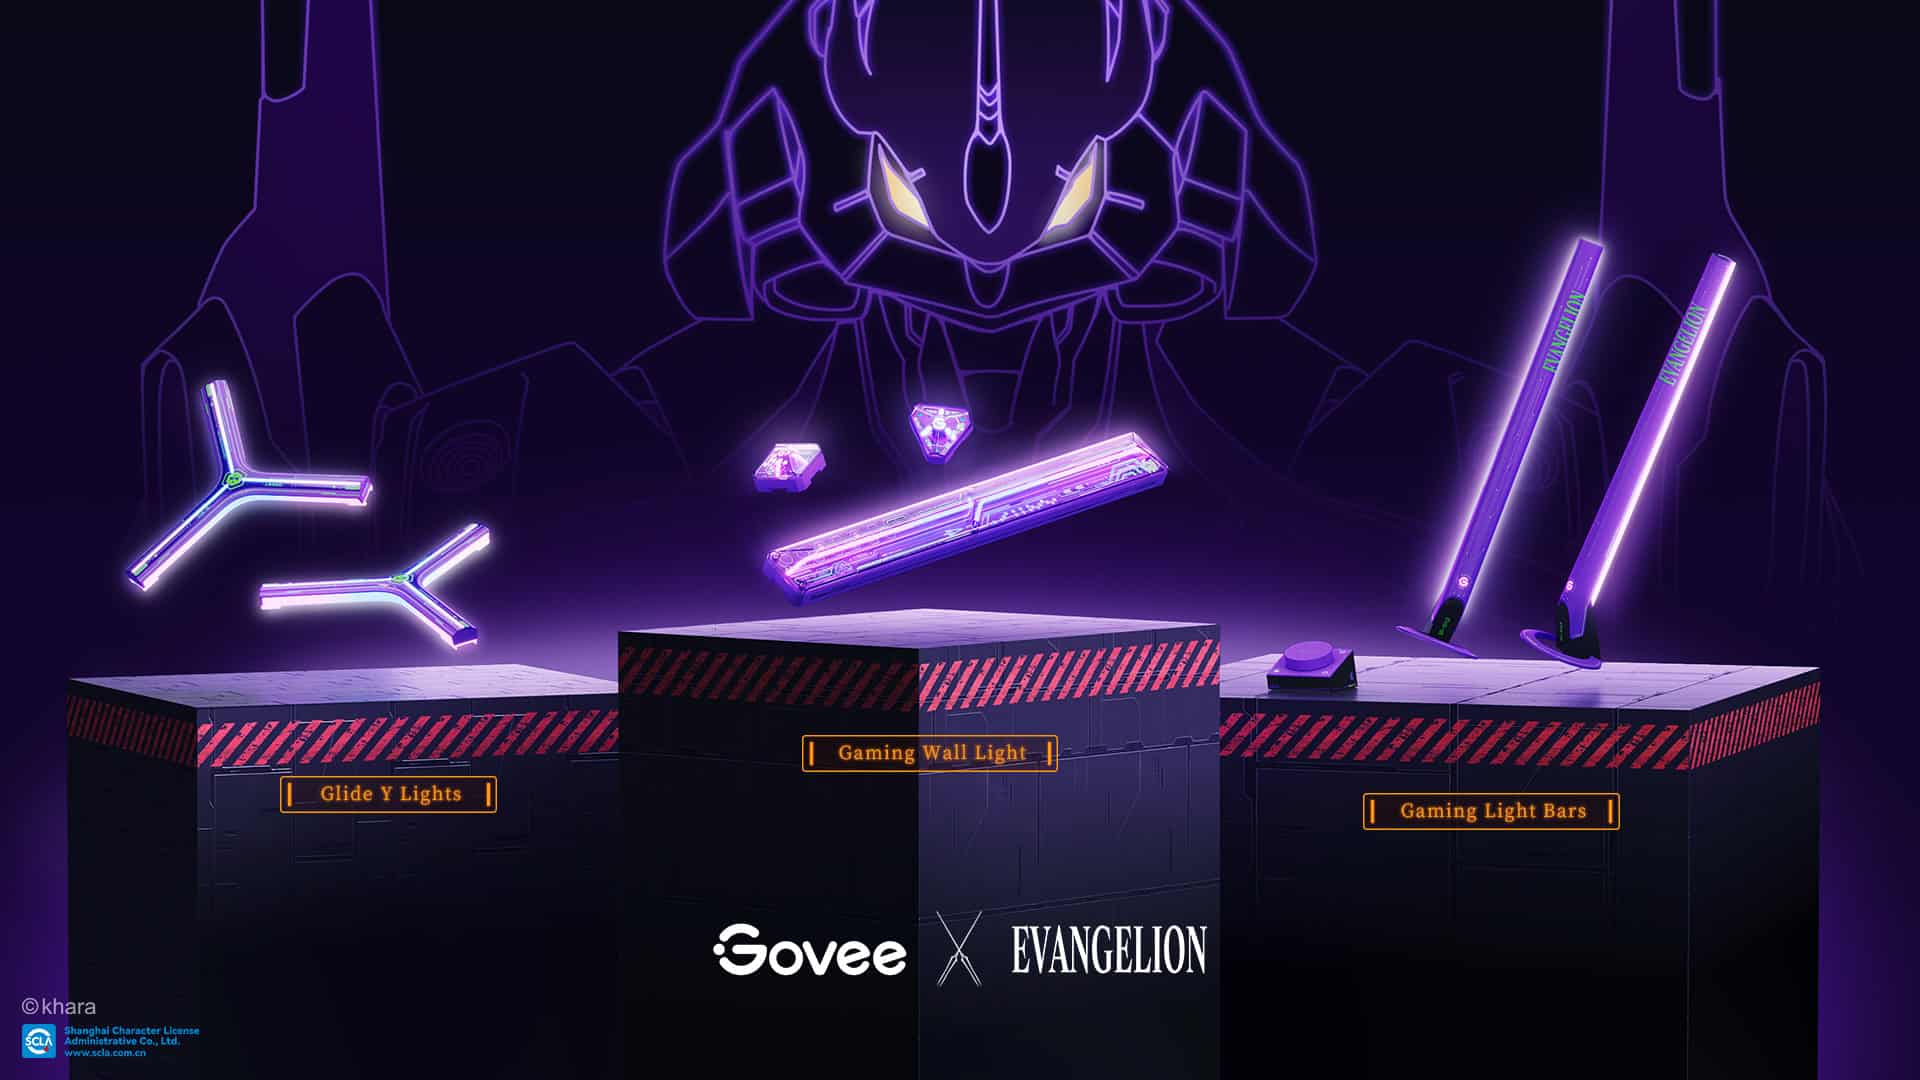 Govee anuncia luces de juego Evangelion de edición limitada